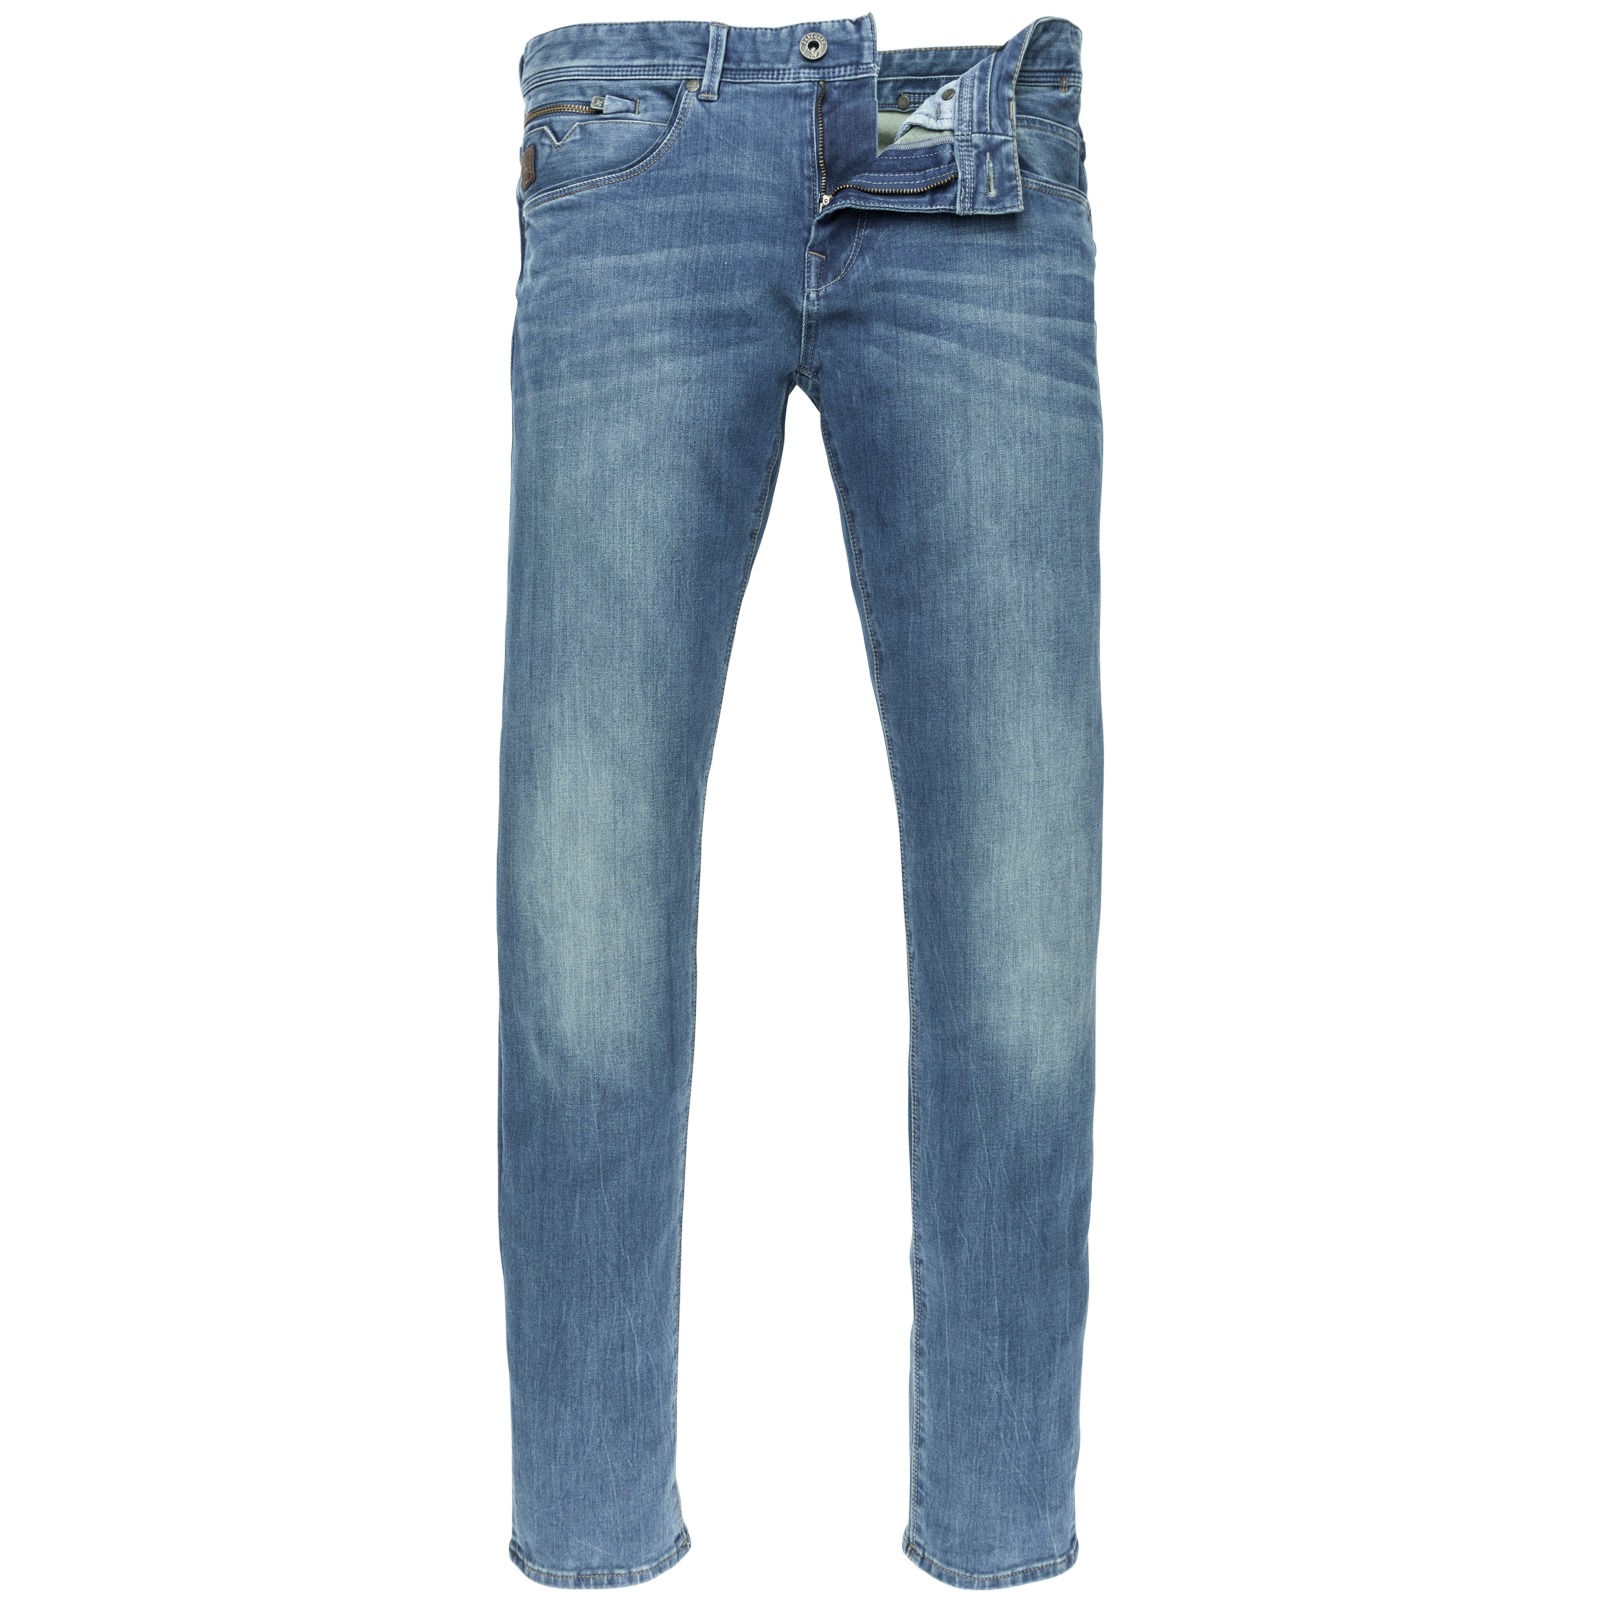 Zelle Schwärzen Absatz ott jeans Hecke Klären ernten